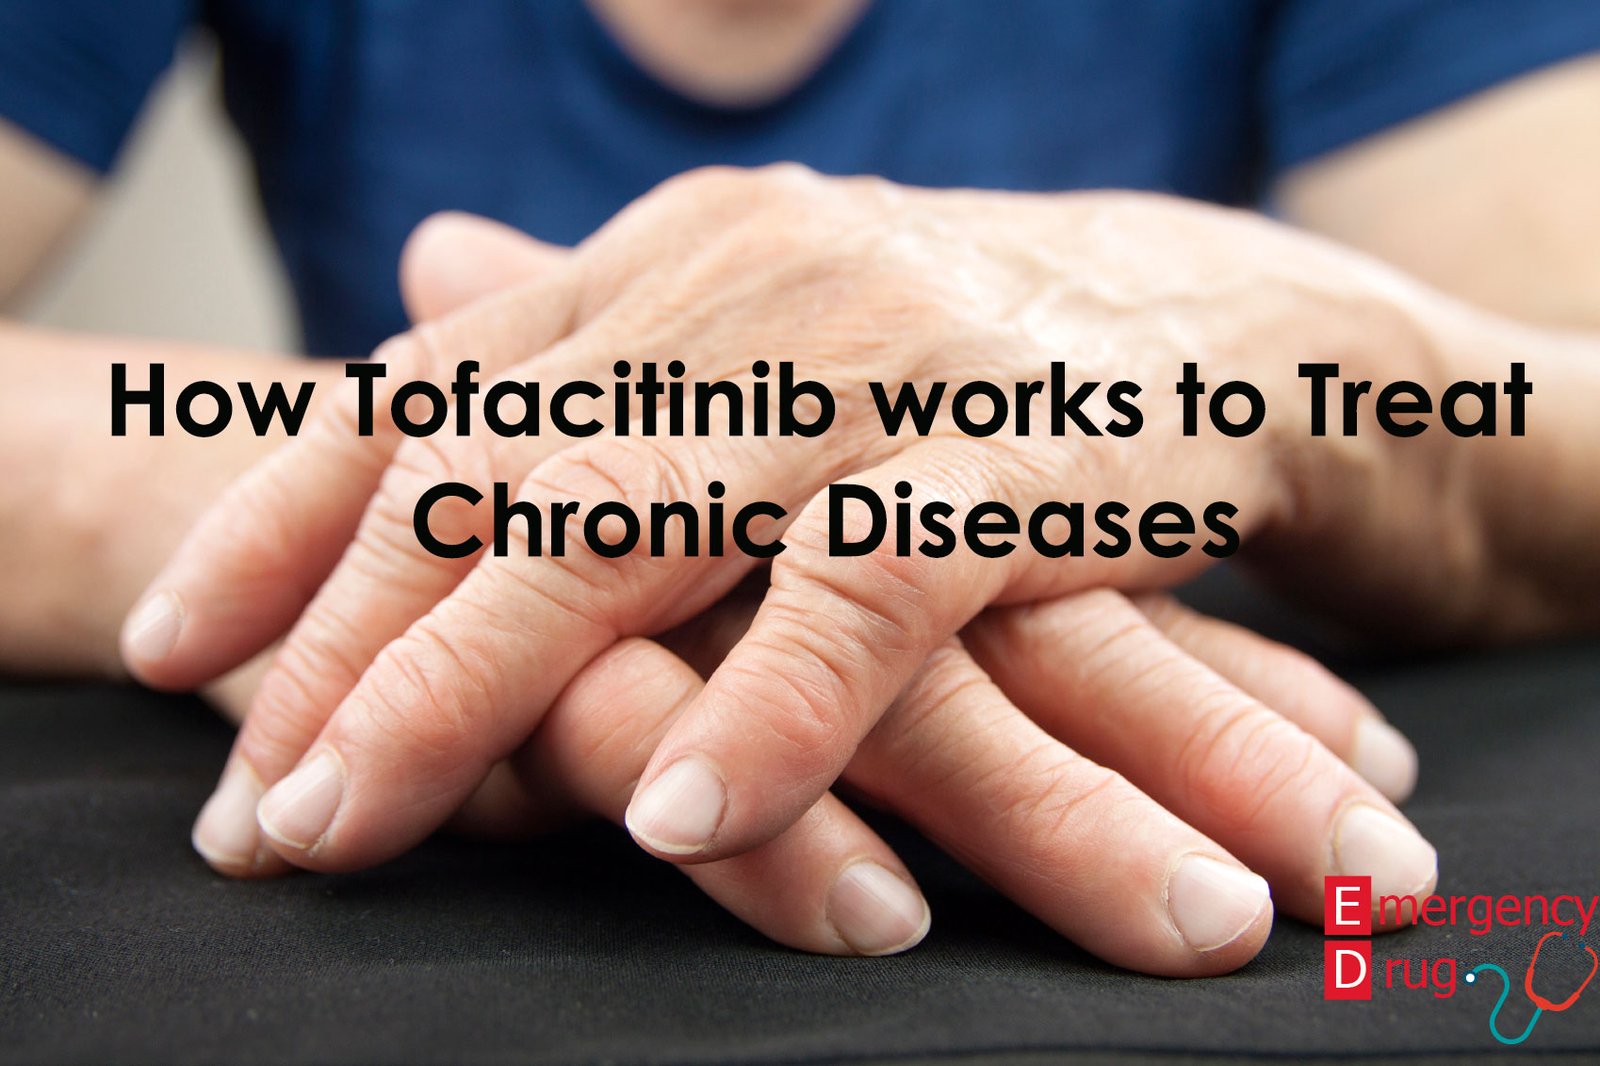 How Tofacitinib works to Treat Chronic Diseases